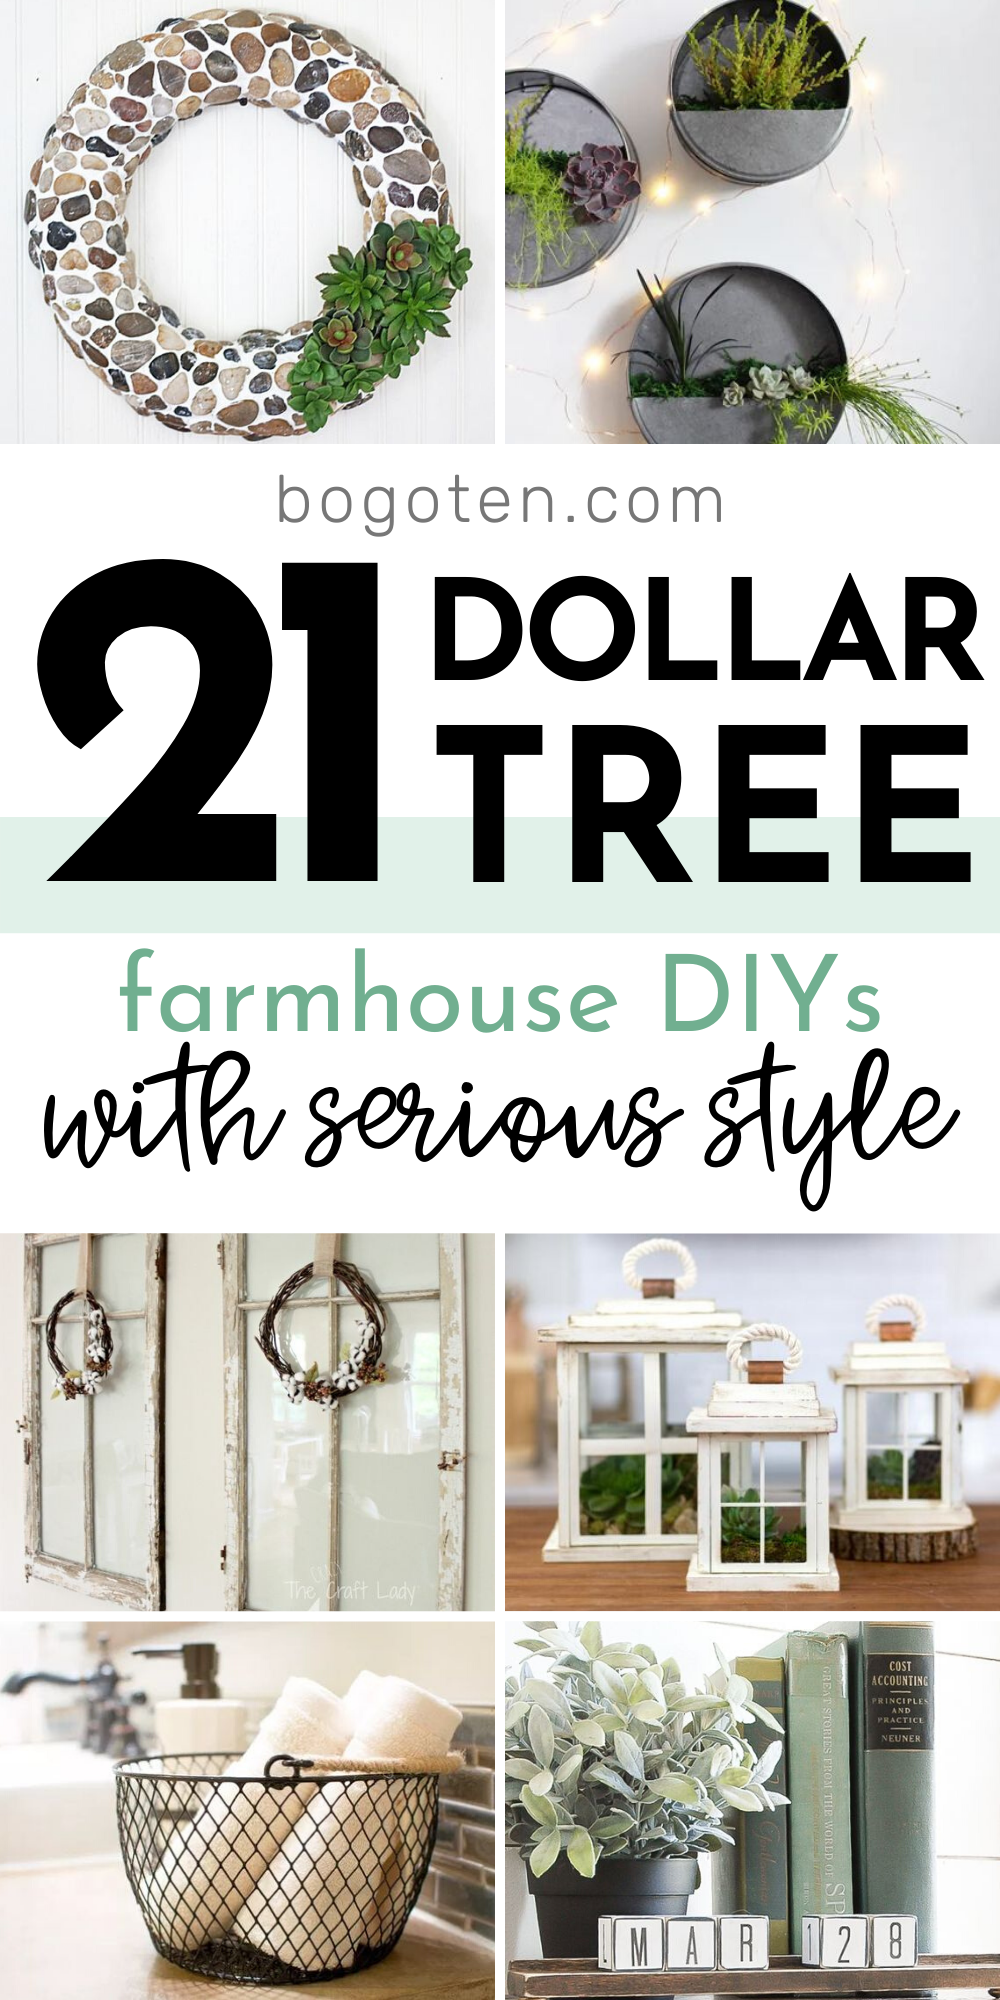 Dollar Tree Farmhouse DIYs They'll Think Cost a Fortune! -   21 diy Decorations maison ideas